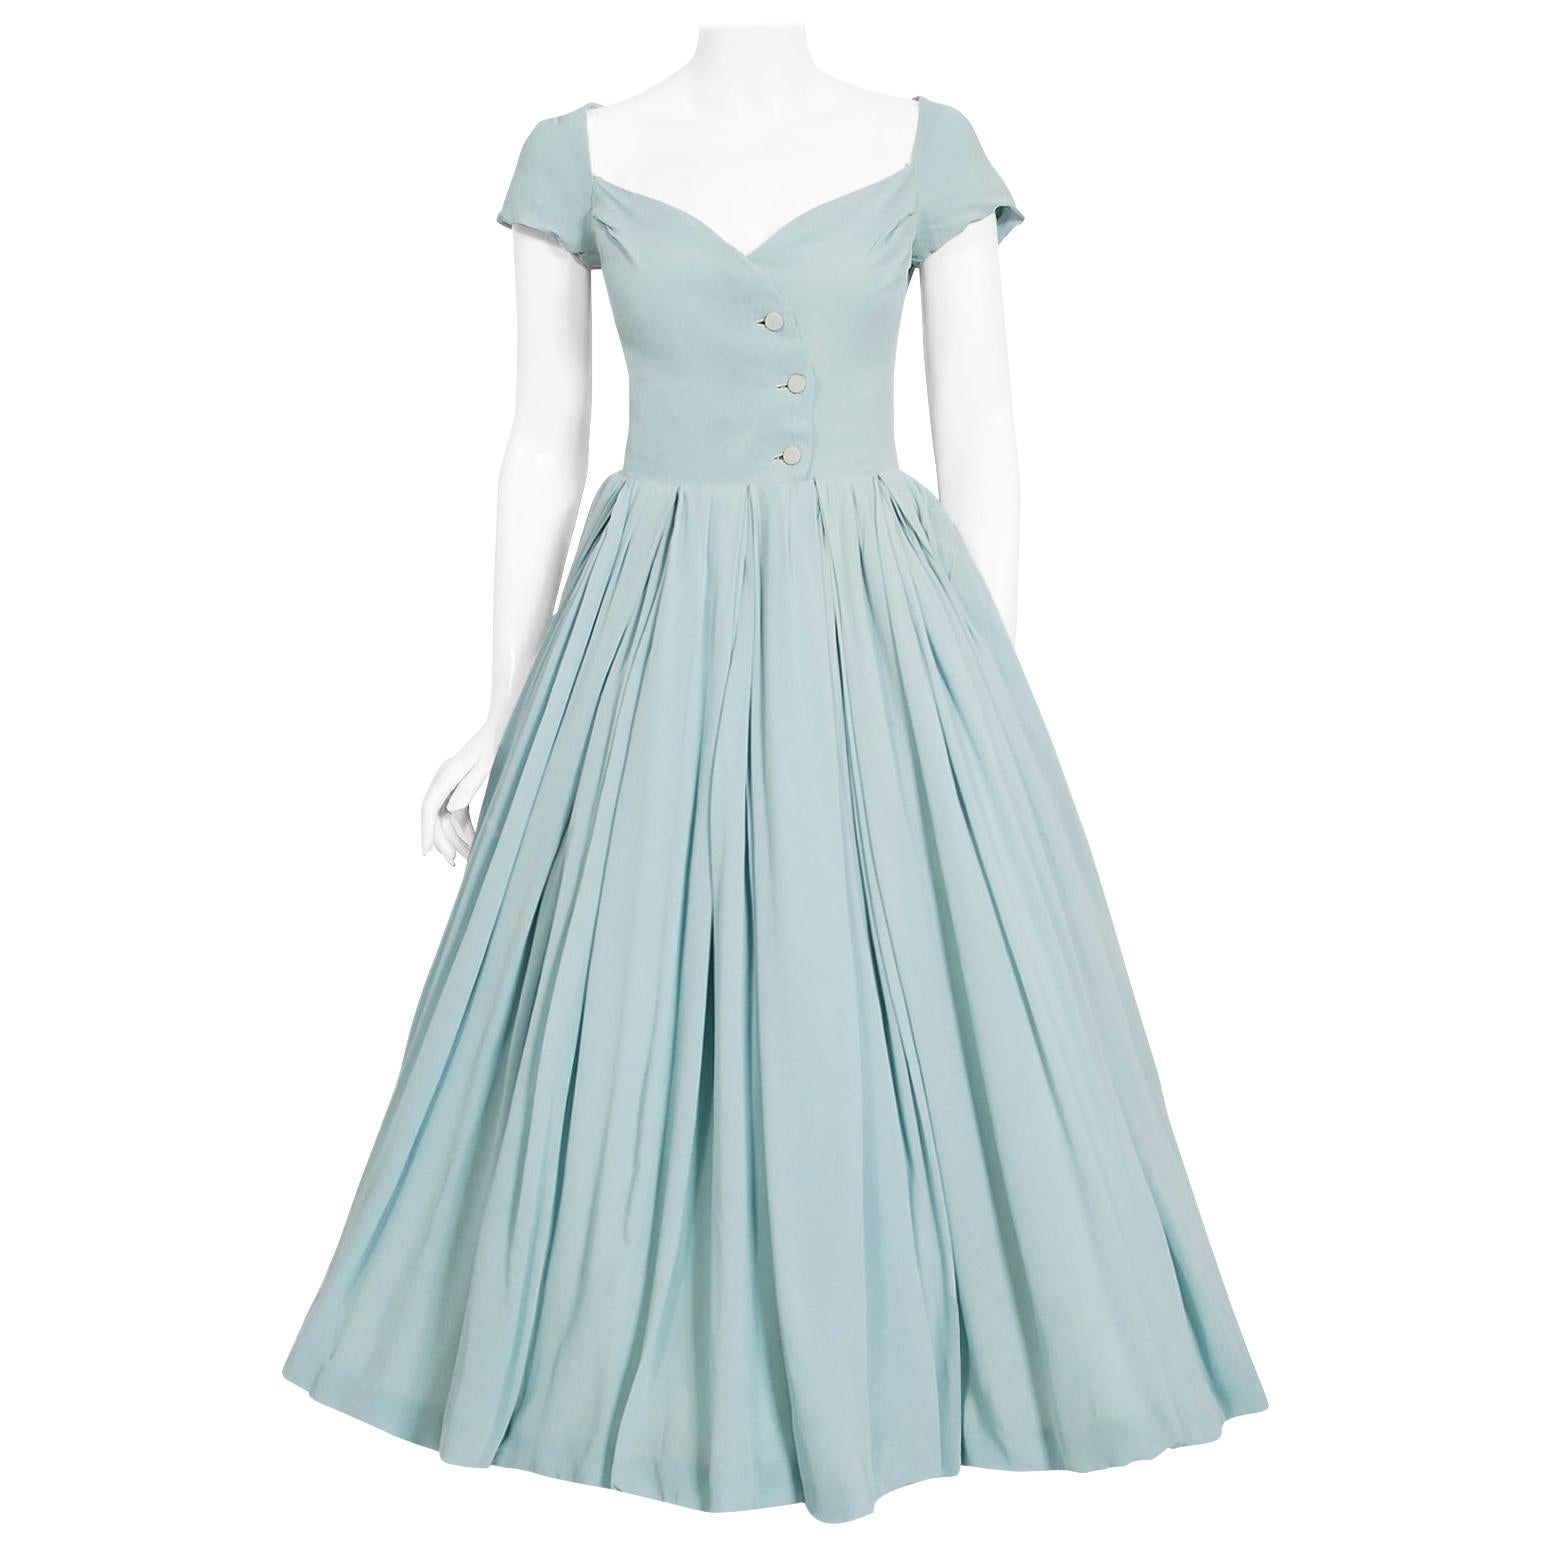 Romona Keveza Collection Spring 2014 Wedding Dresses | Wedding Inspirasi